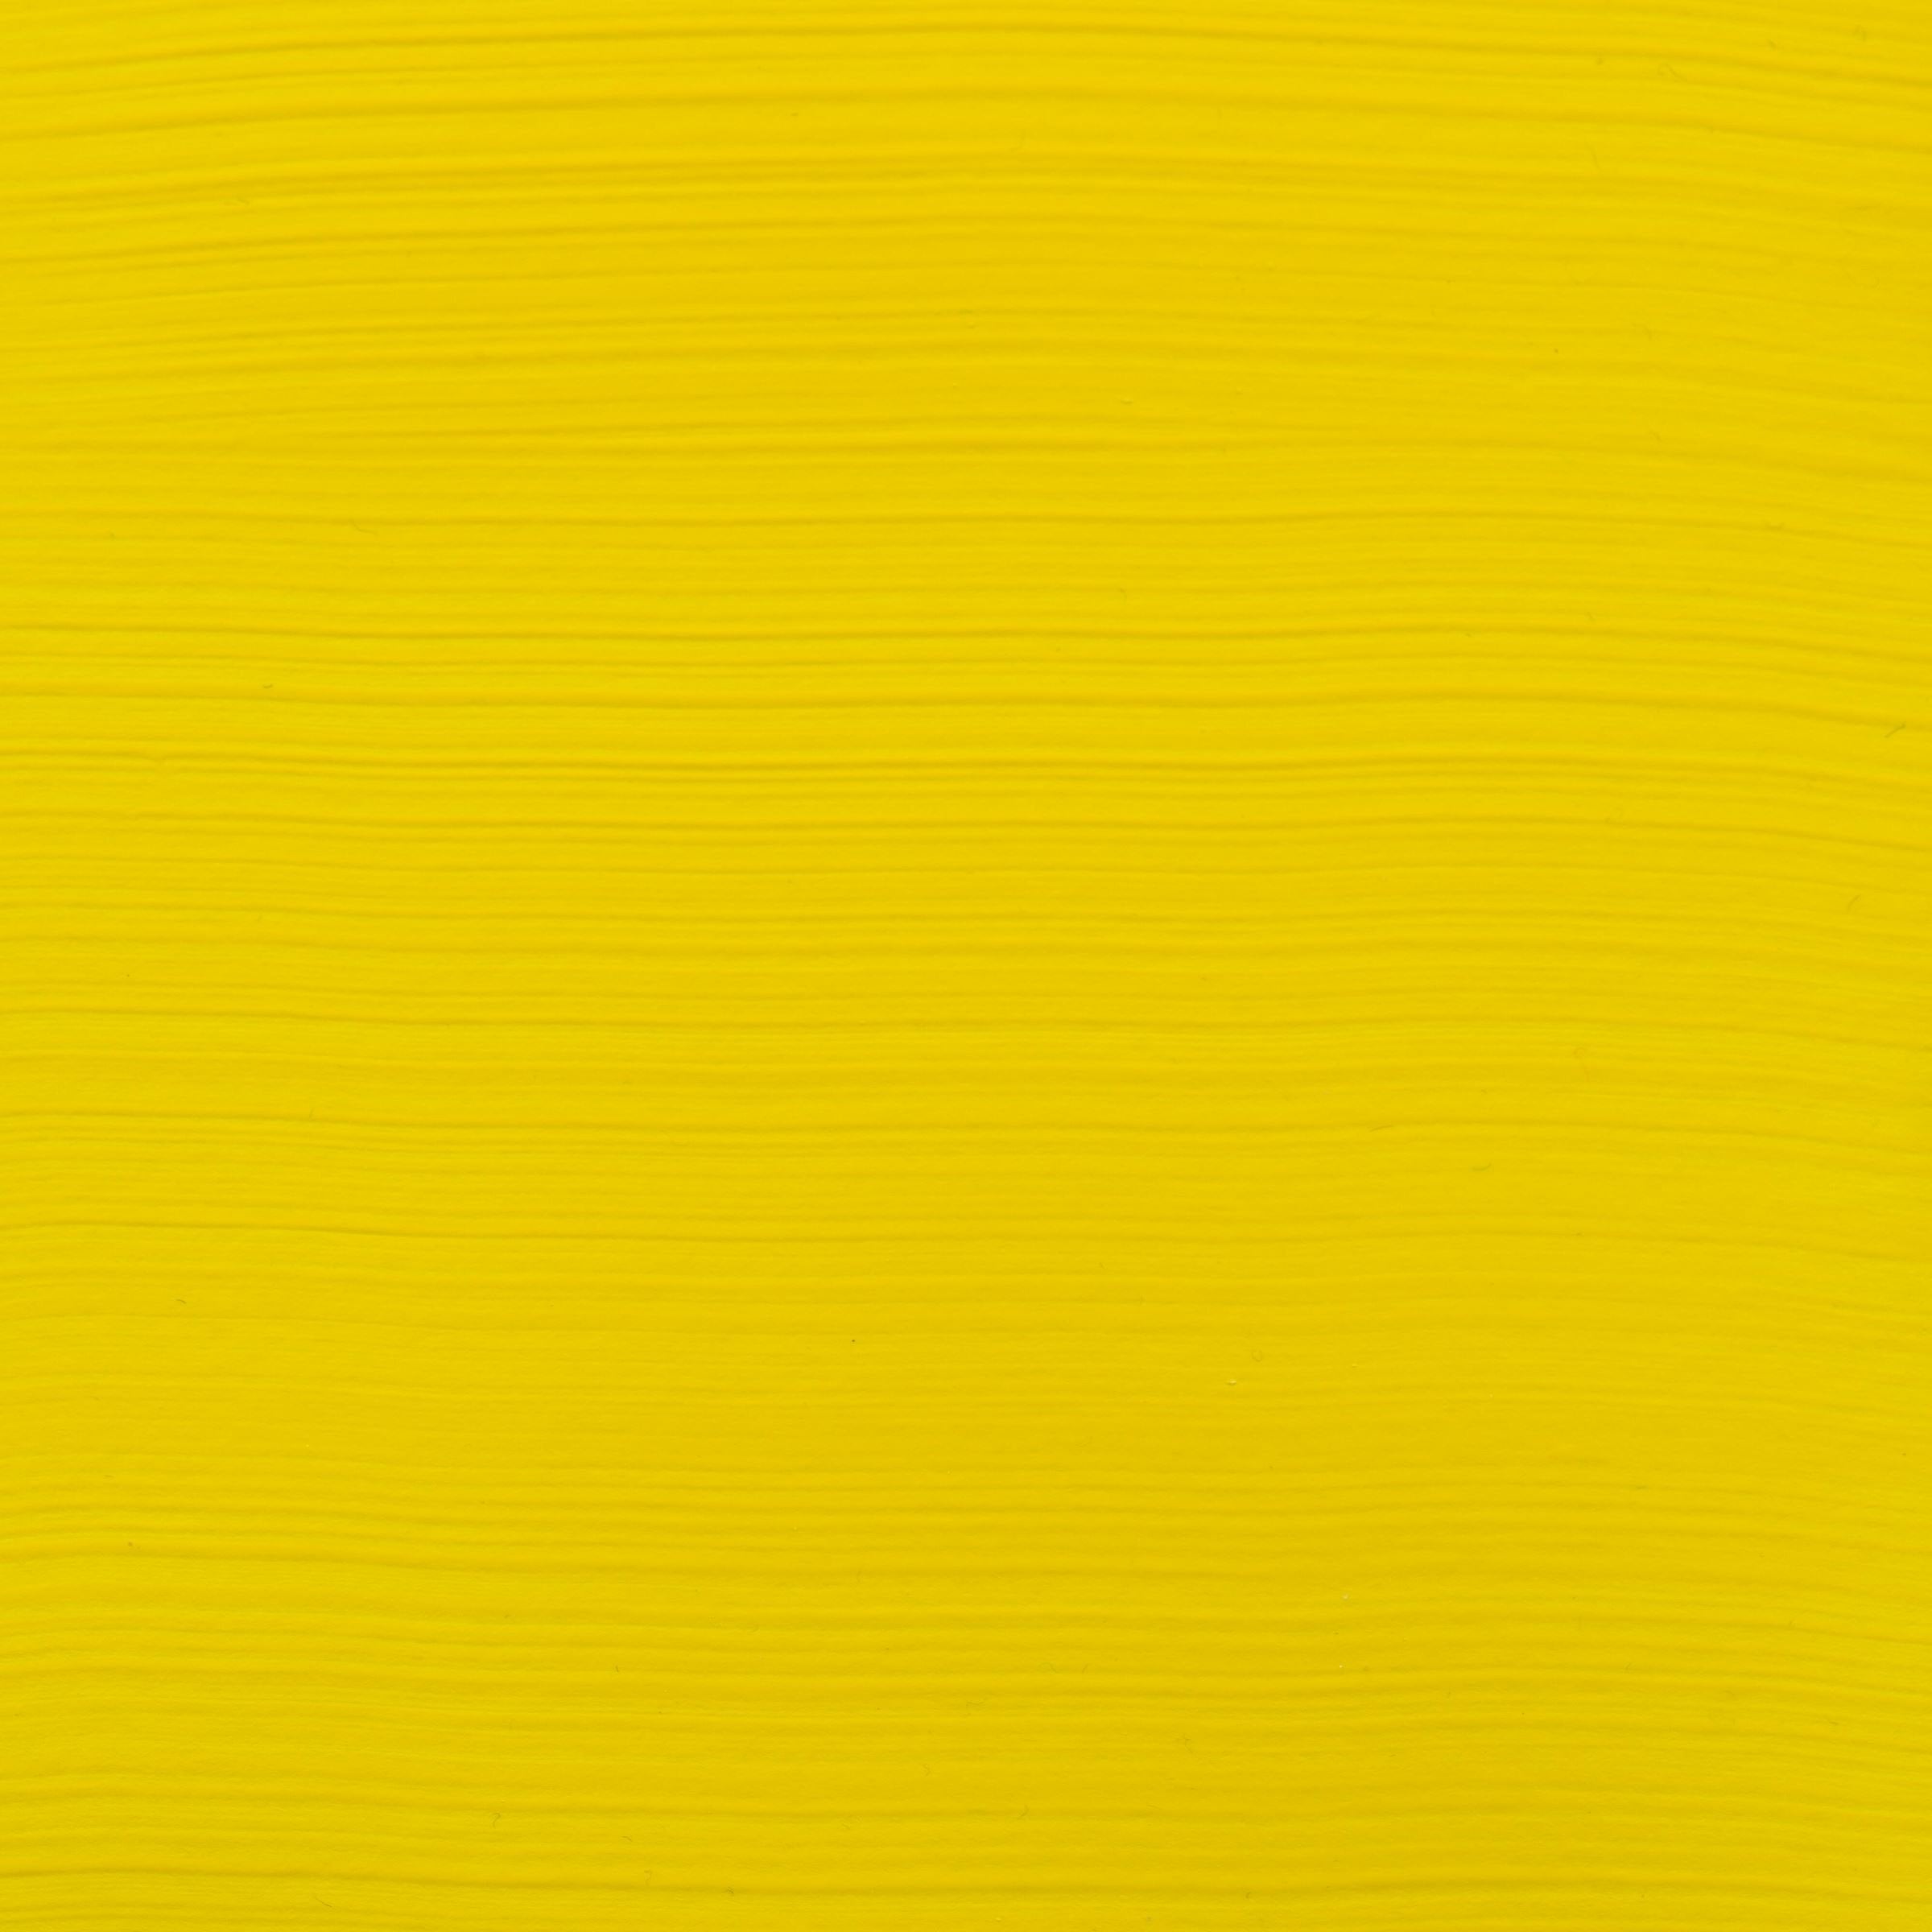 Amsterdam Standard Acrylic Paint 120ml-Primary Yellow 